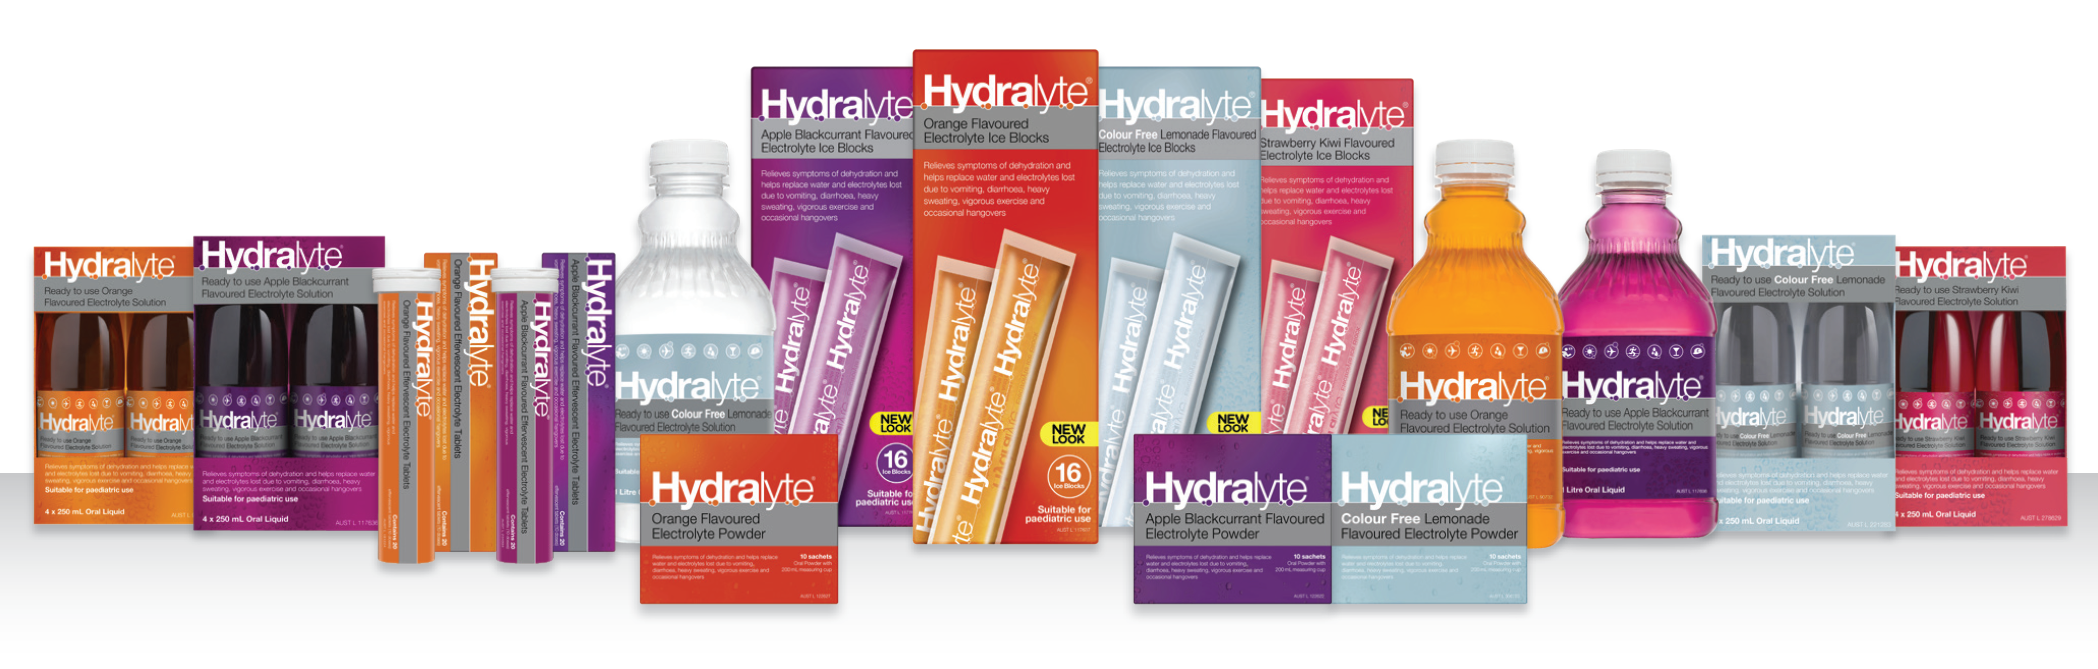 Hydralyte product range